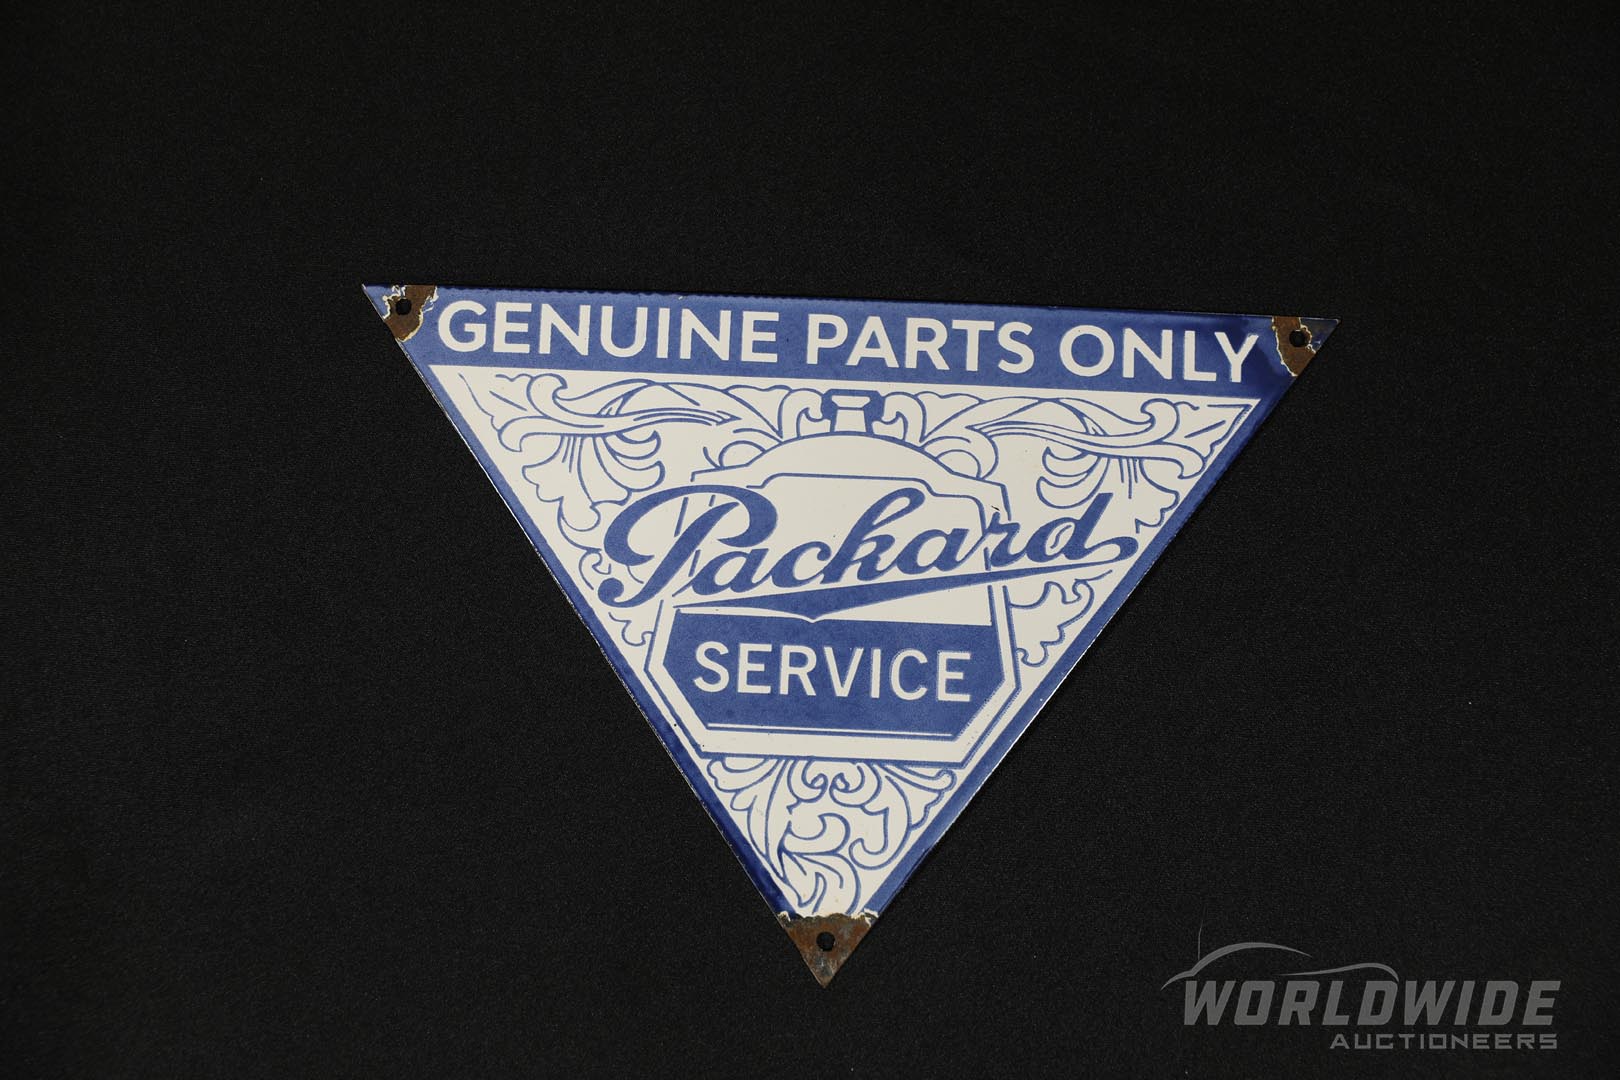  Circa 1915 Original Packard Tr iangle Single-Sided Porcelain Sign 